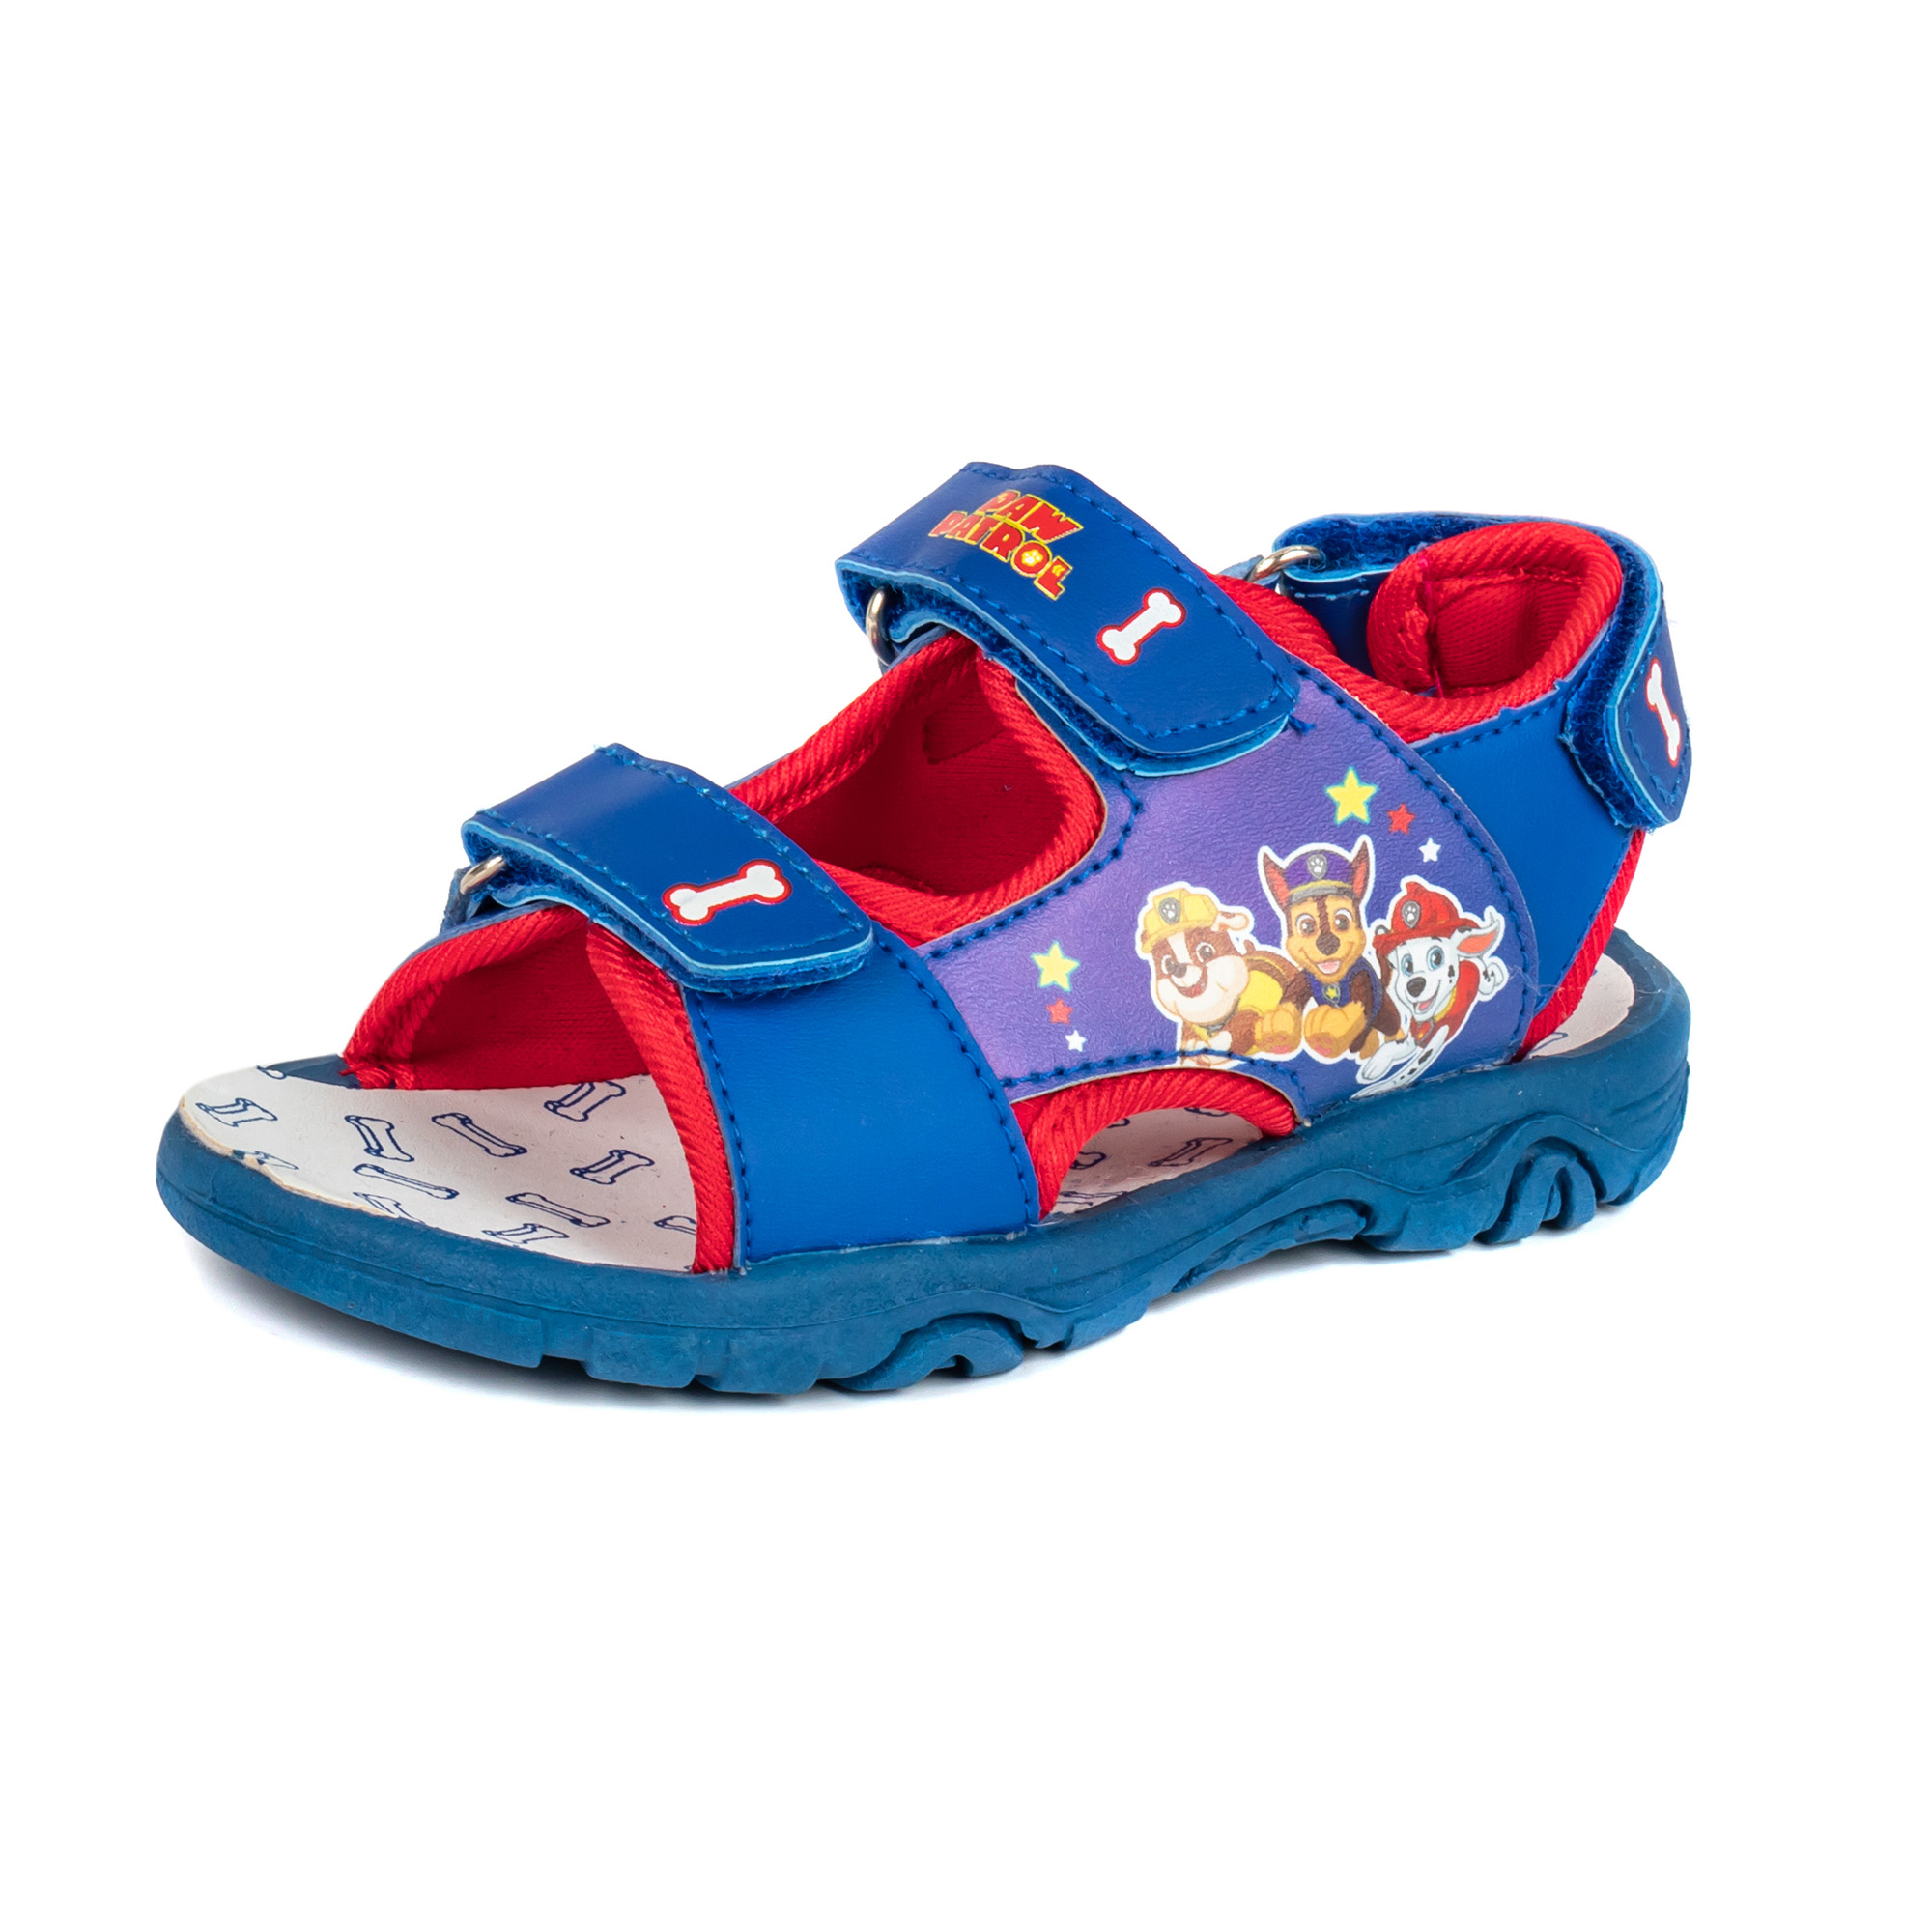 Kid shoes,Sneaker Shoes, Children Shoes, Sandals,beach Sandals  Royal Pu upper, PU Velcro EVA Outsole